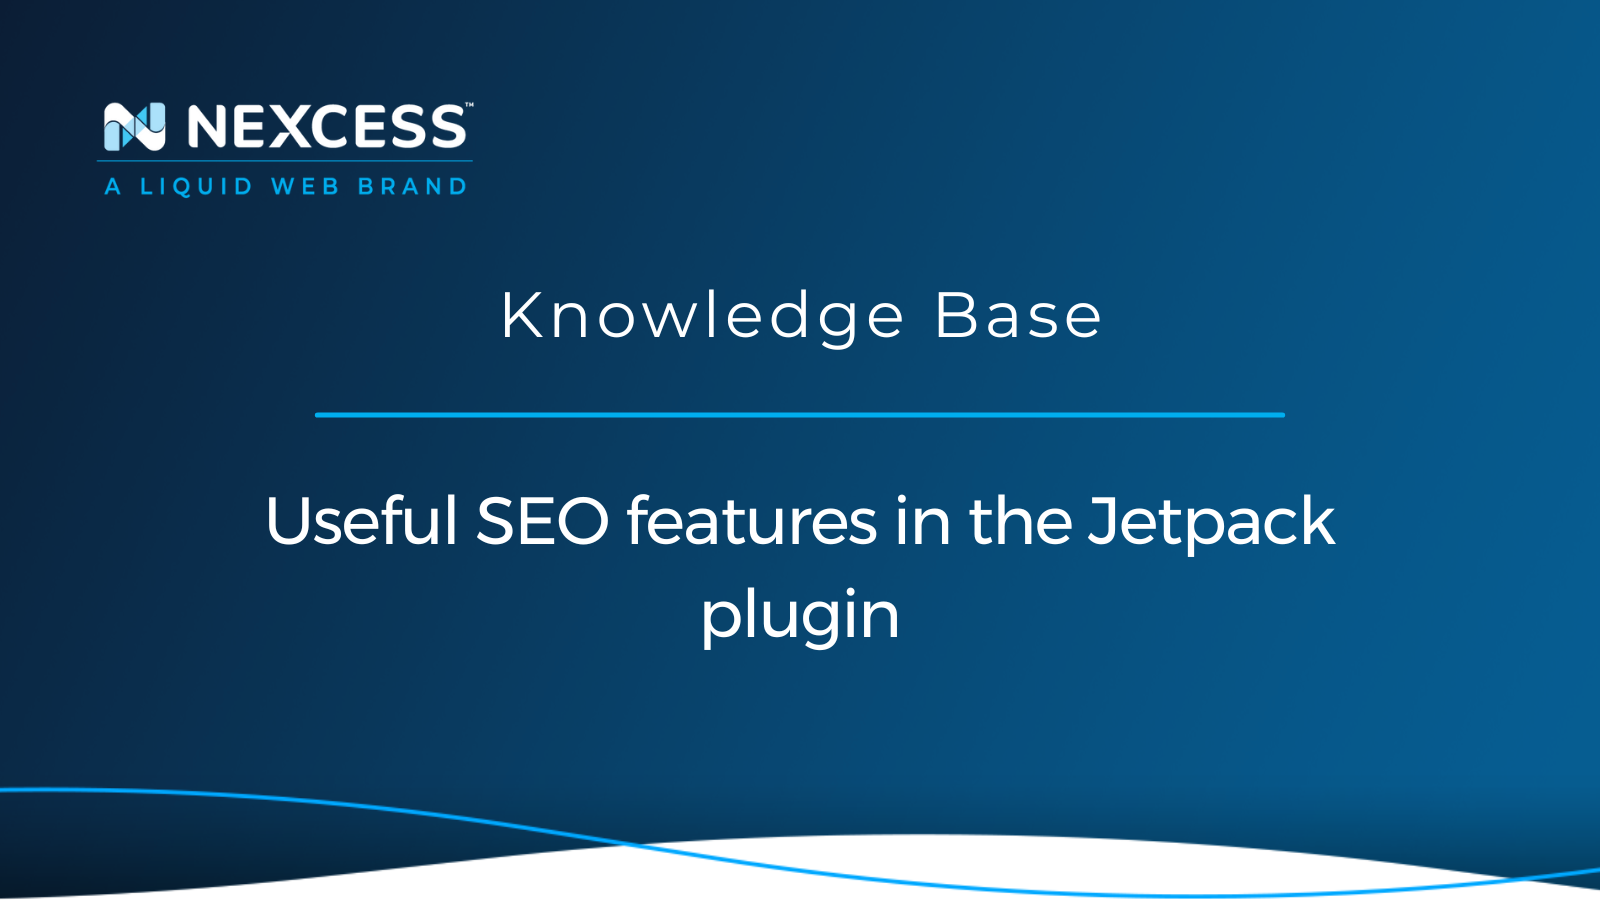 Useful SEO features in the Jetpack plugin